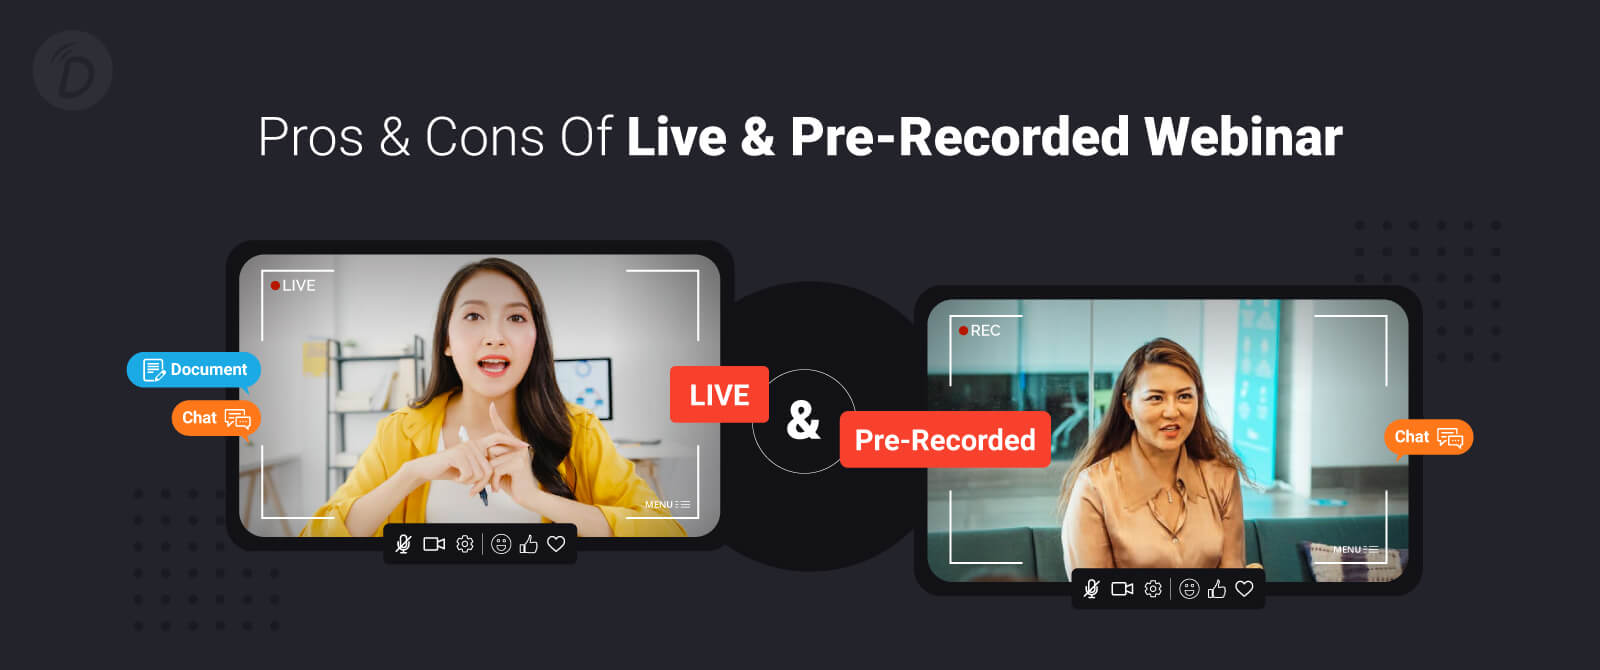 Pros & Cons of Live & Pre-Recorded Webinar